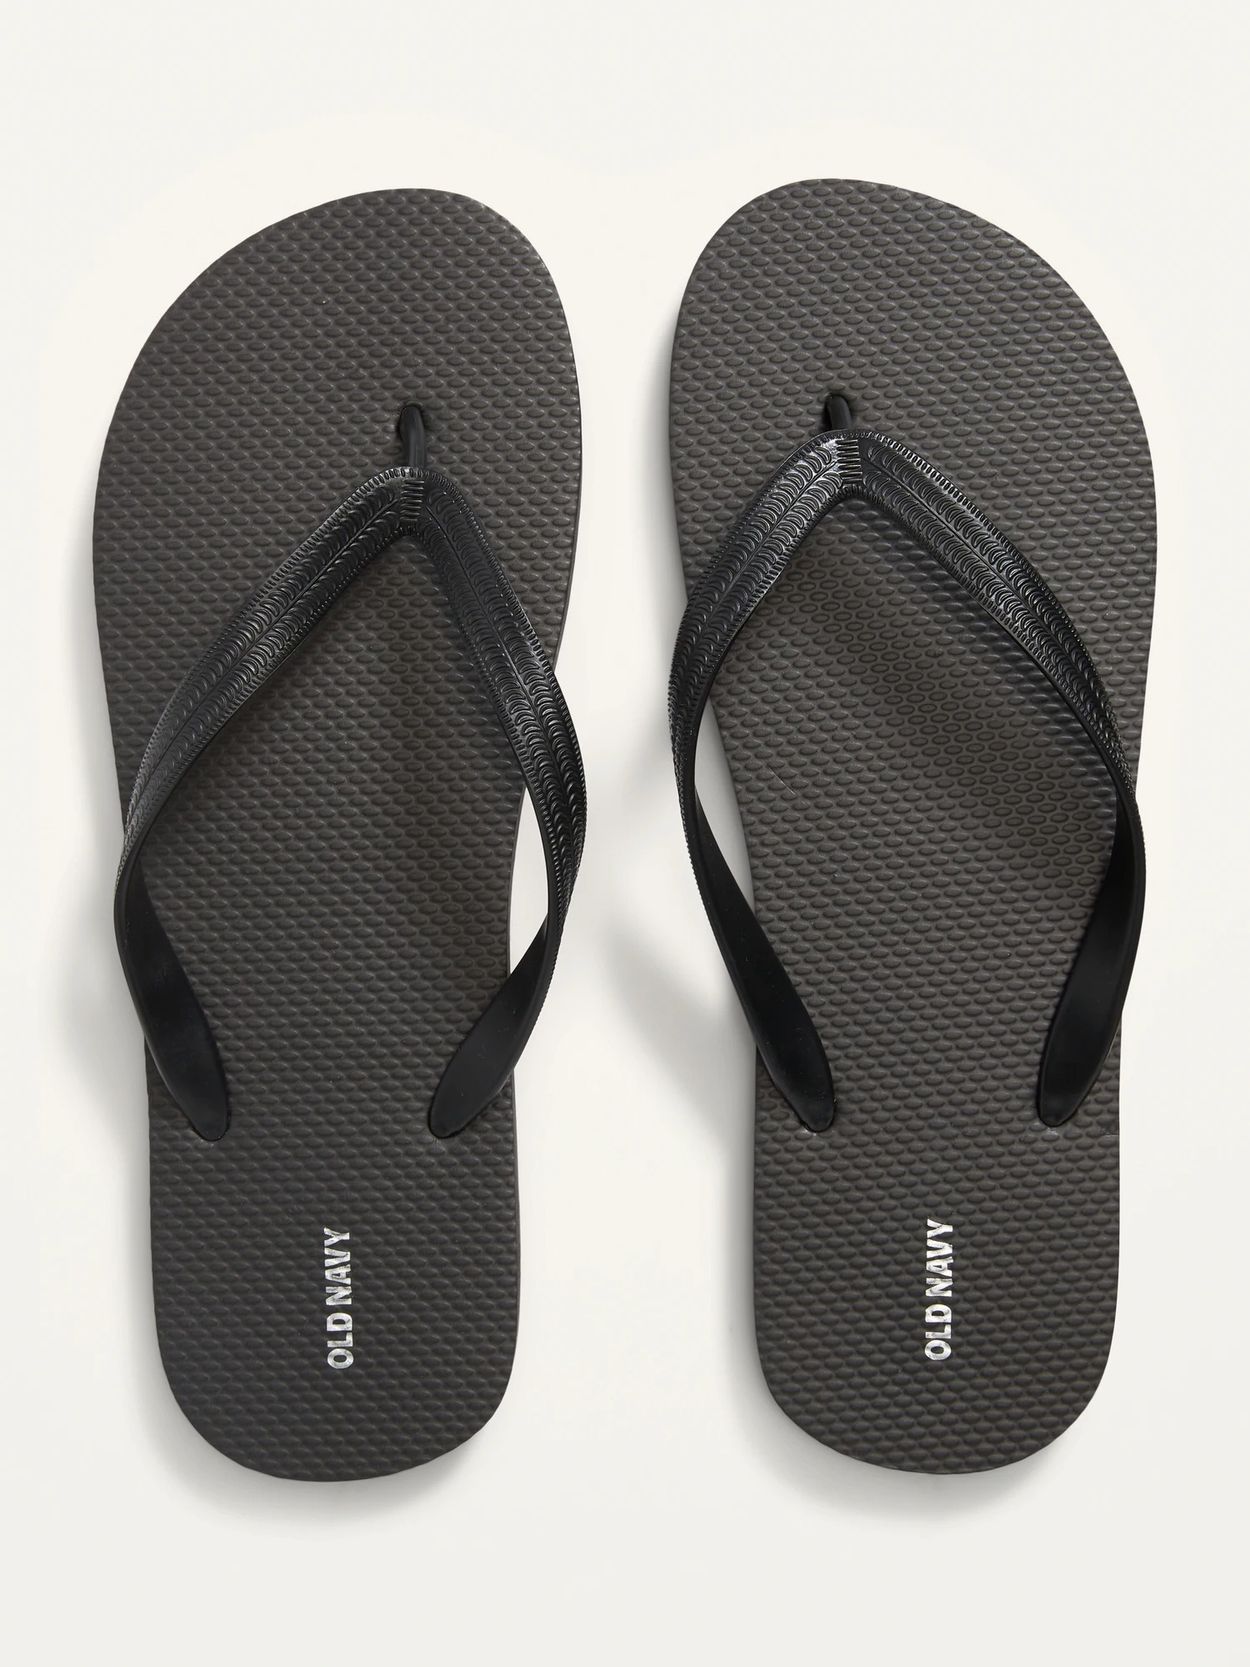 Flip-Flop Sandals for Men Partially Plant-Based